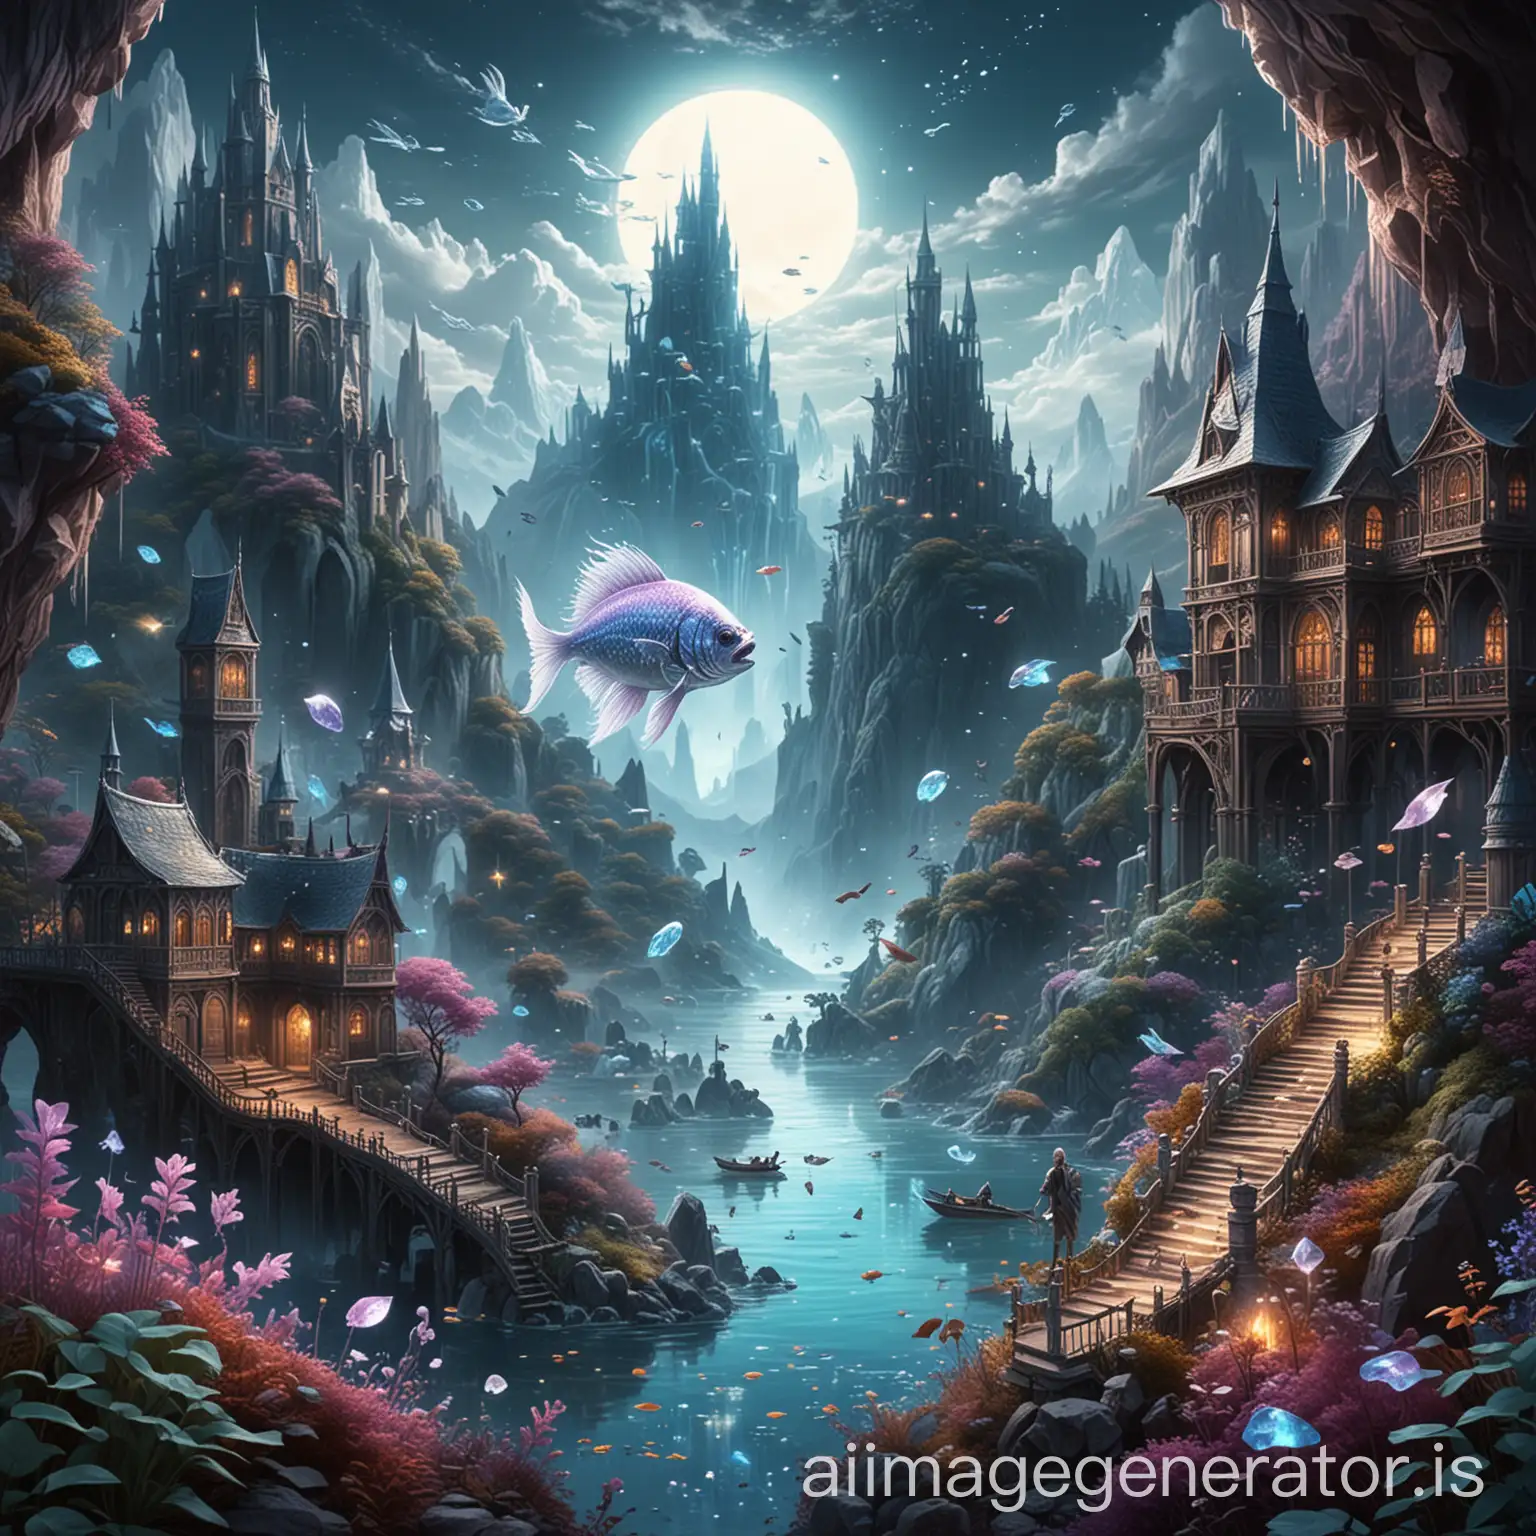 Enchanting-Fantasy-World-with-Crystal-Fish-and-Castles